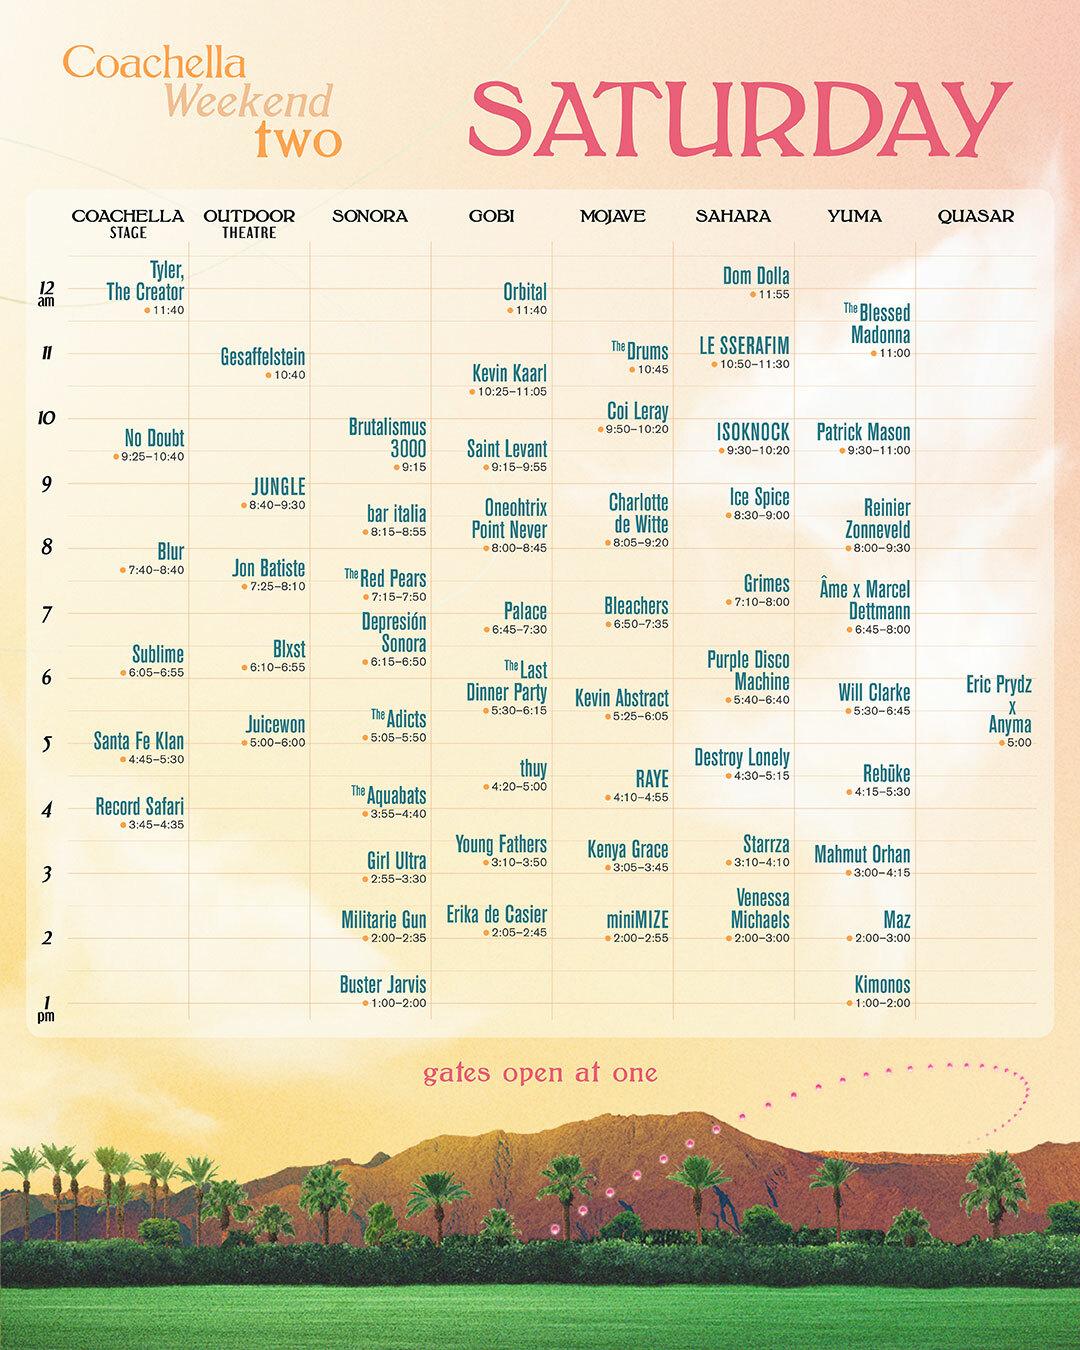 Coachella weekend two Saturday schedule